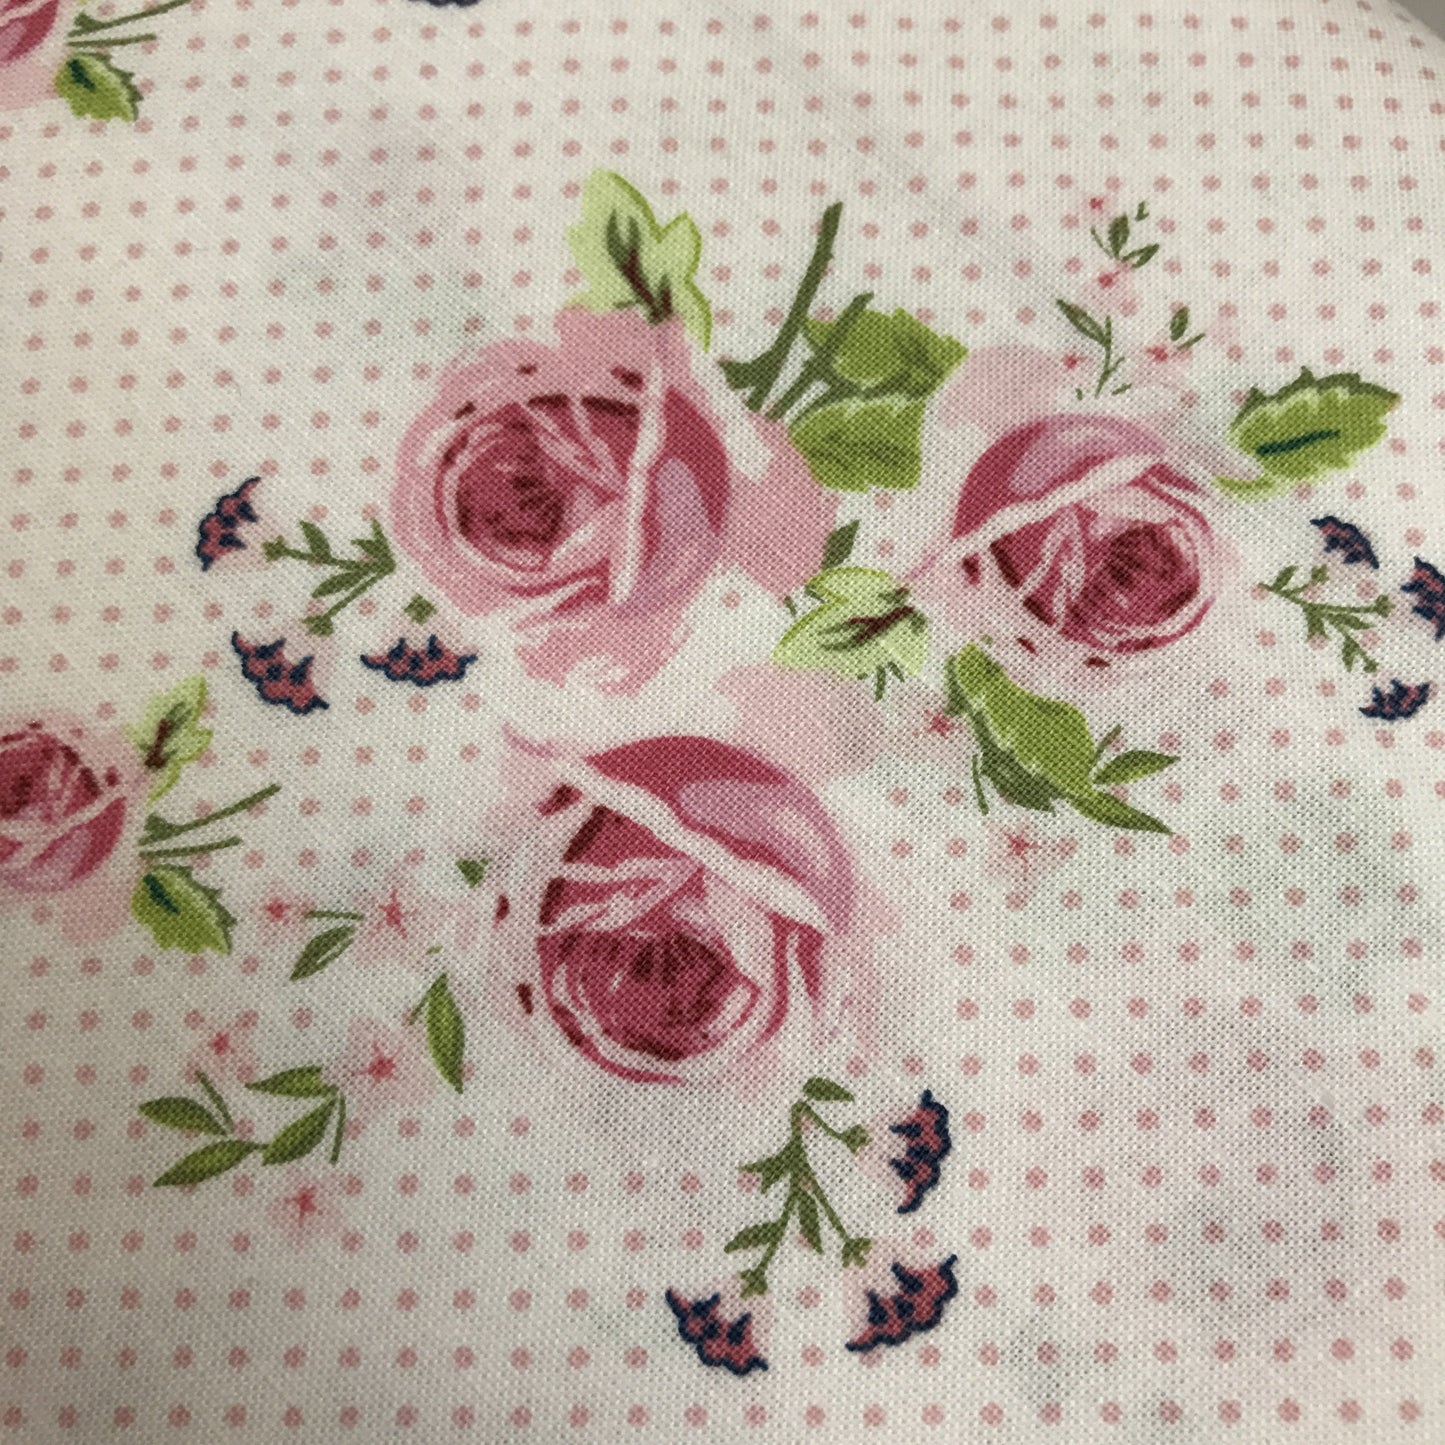 Fabric Felt - Polka Dot Roses